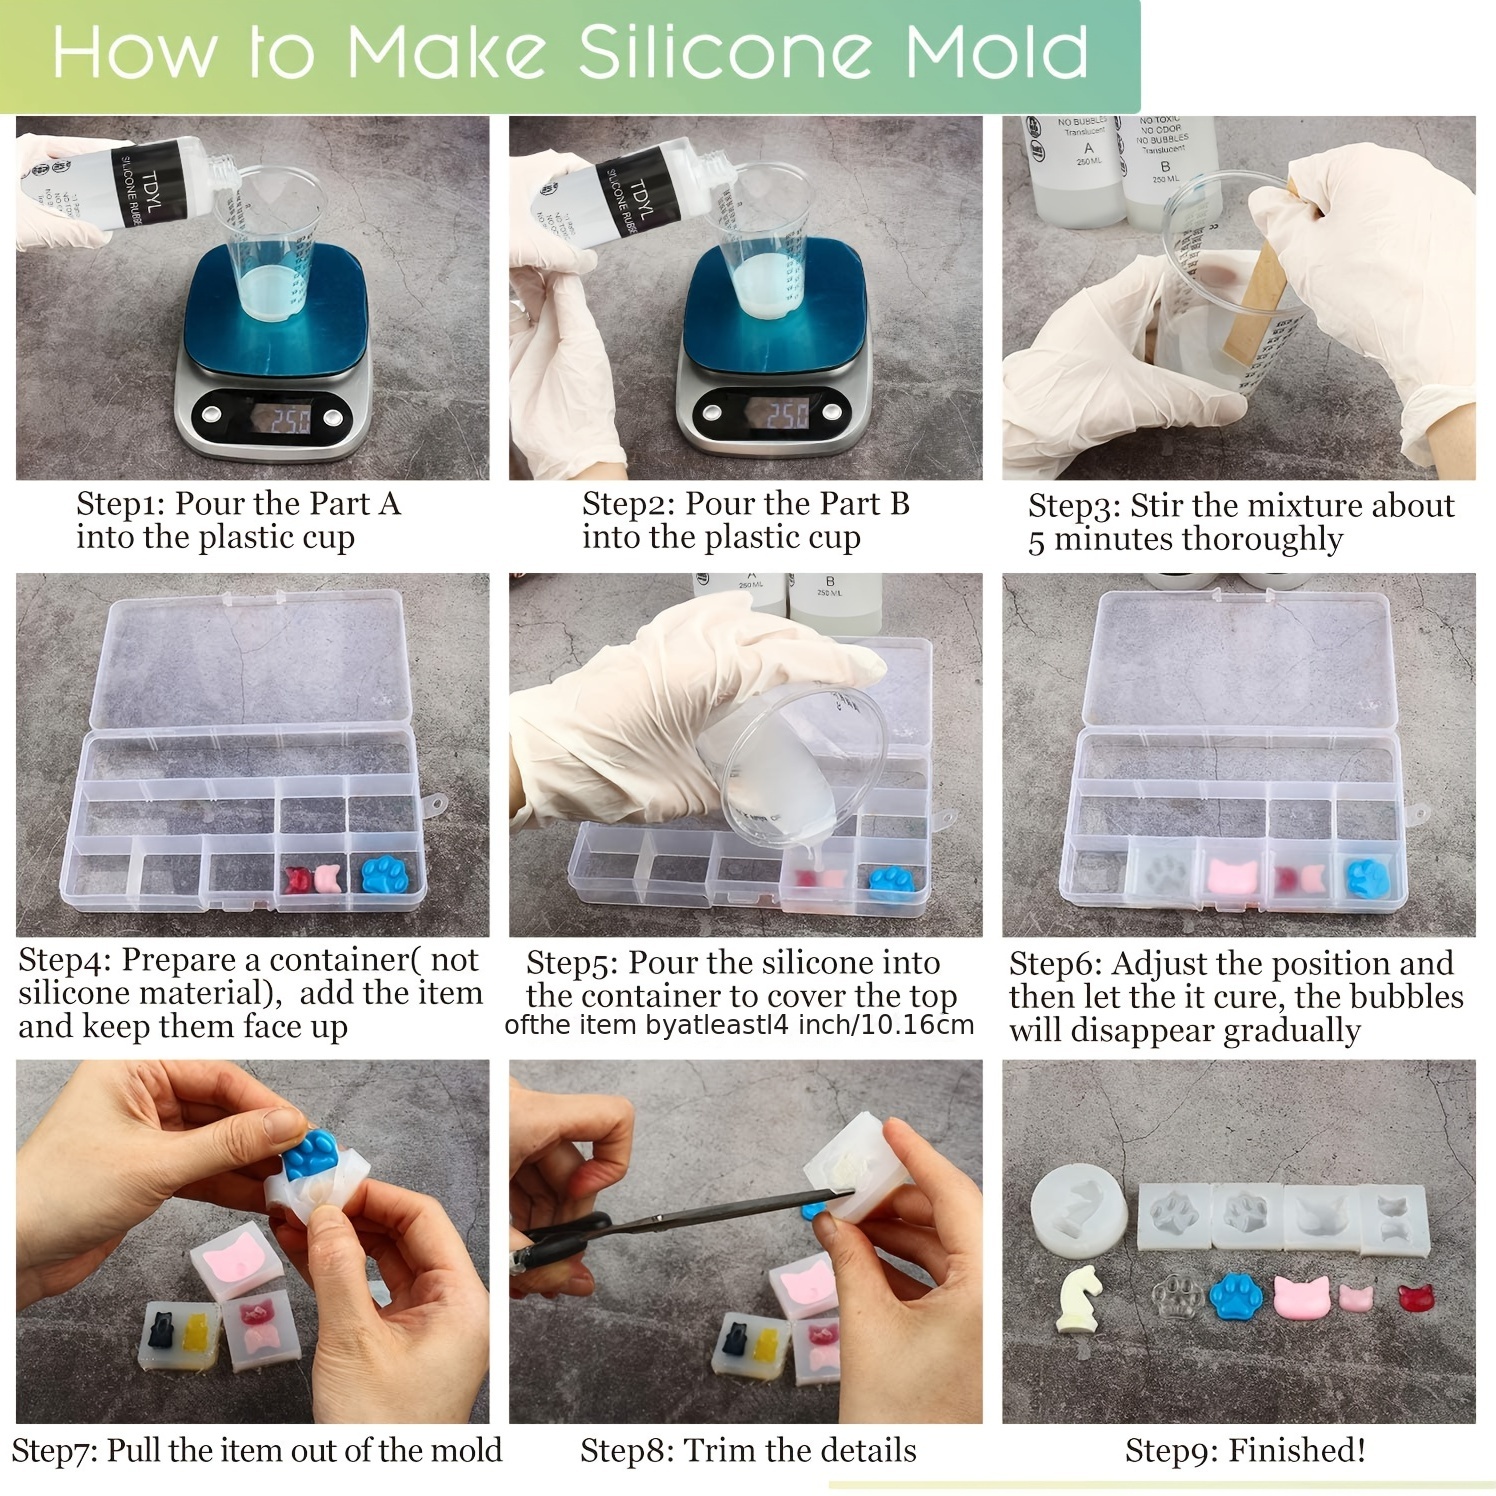 Make silicone mold in two parts per casting